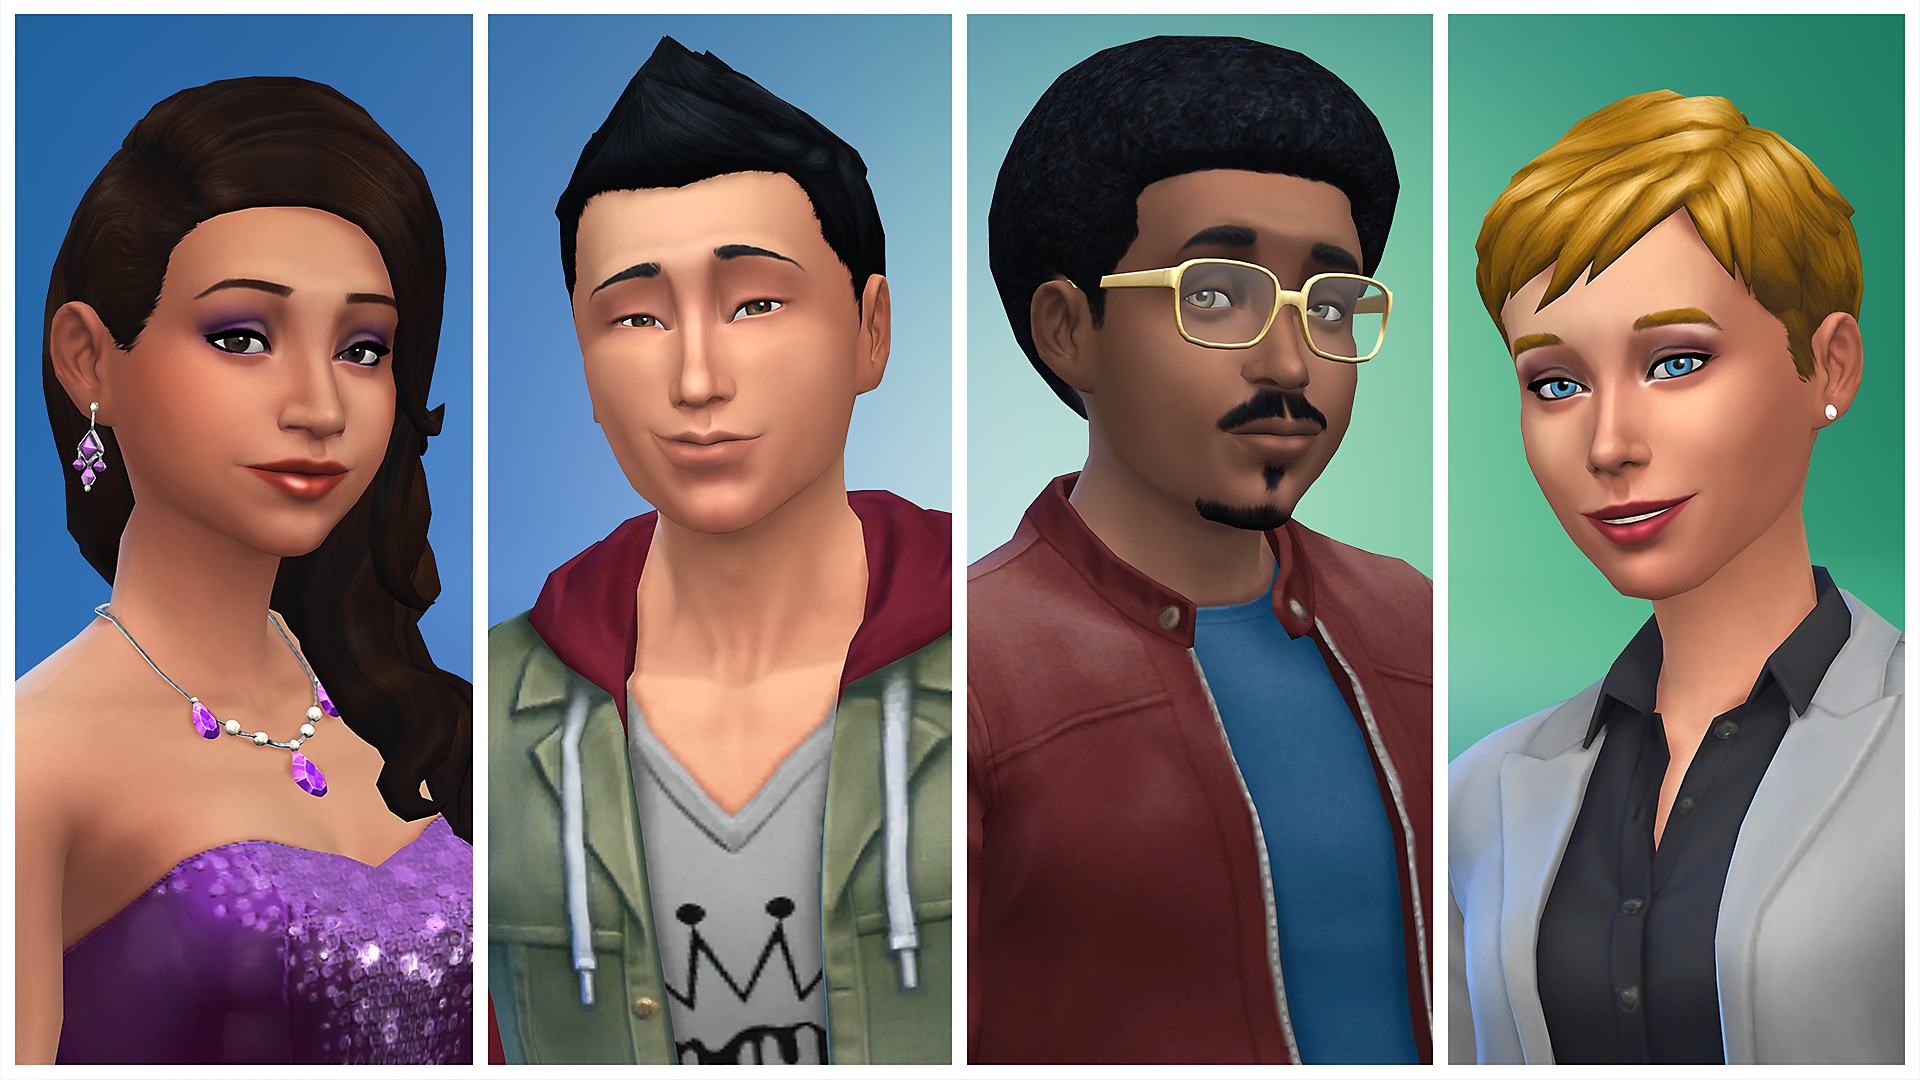 تكوين أشخاص Sims فريدين